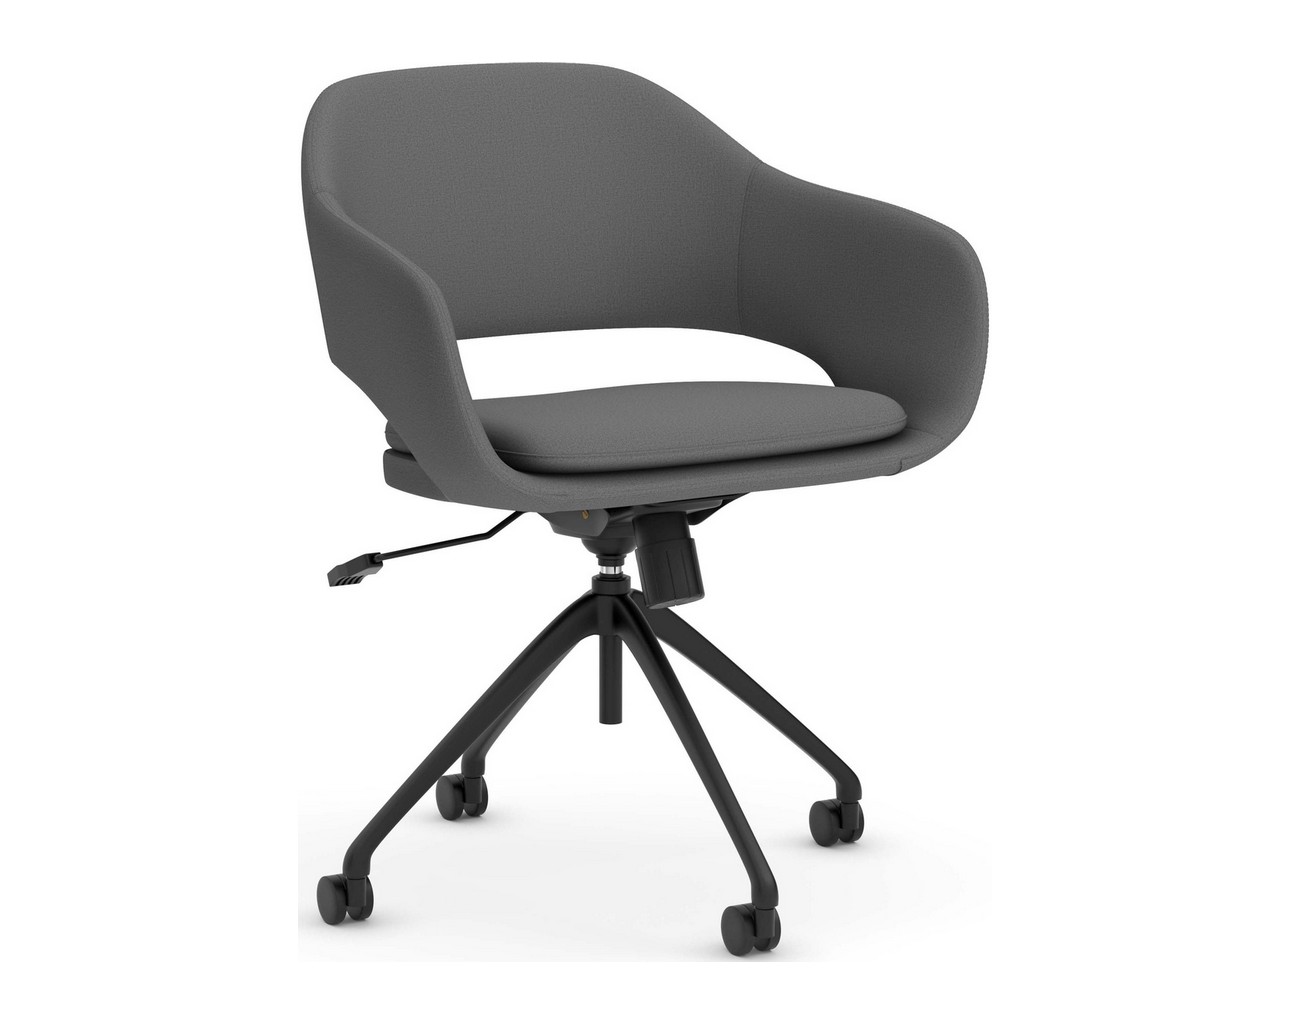 Kona Guest Chair with Swivel Base – Grey